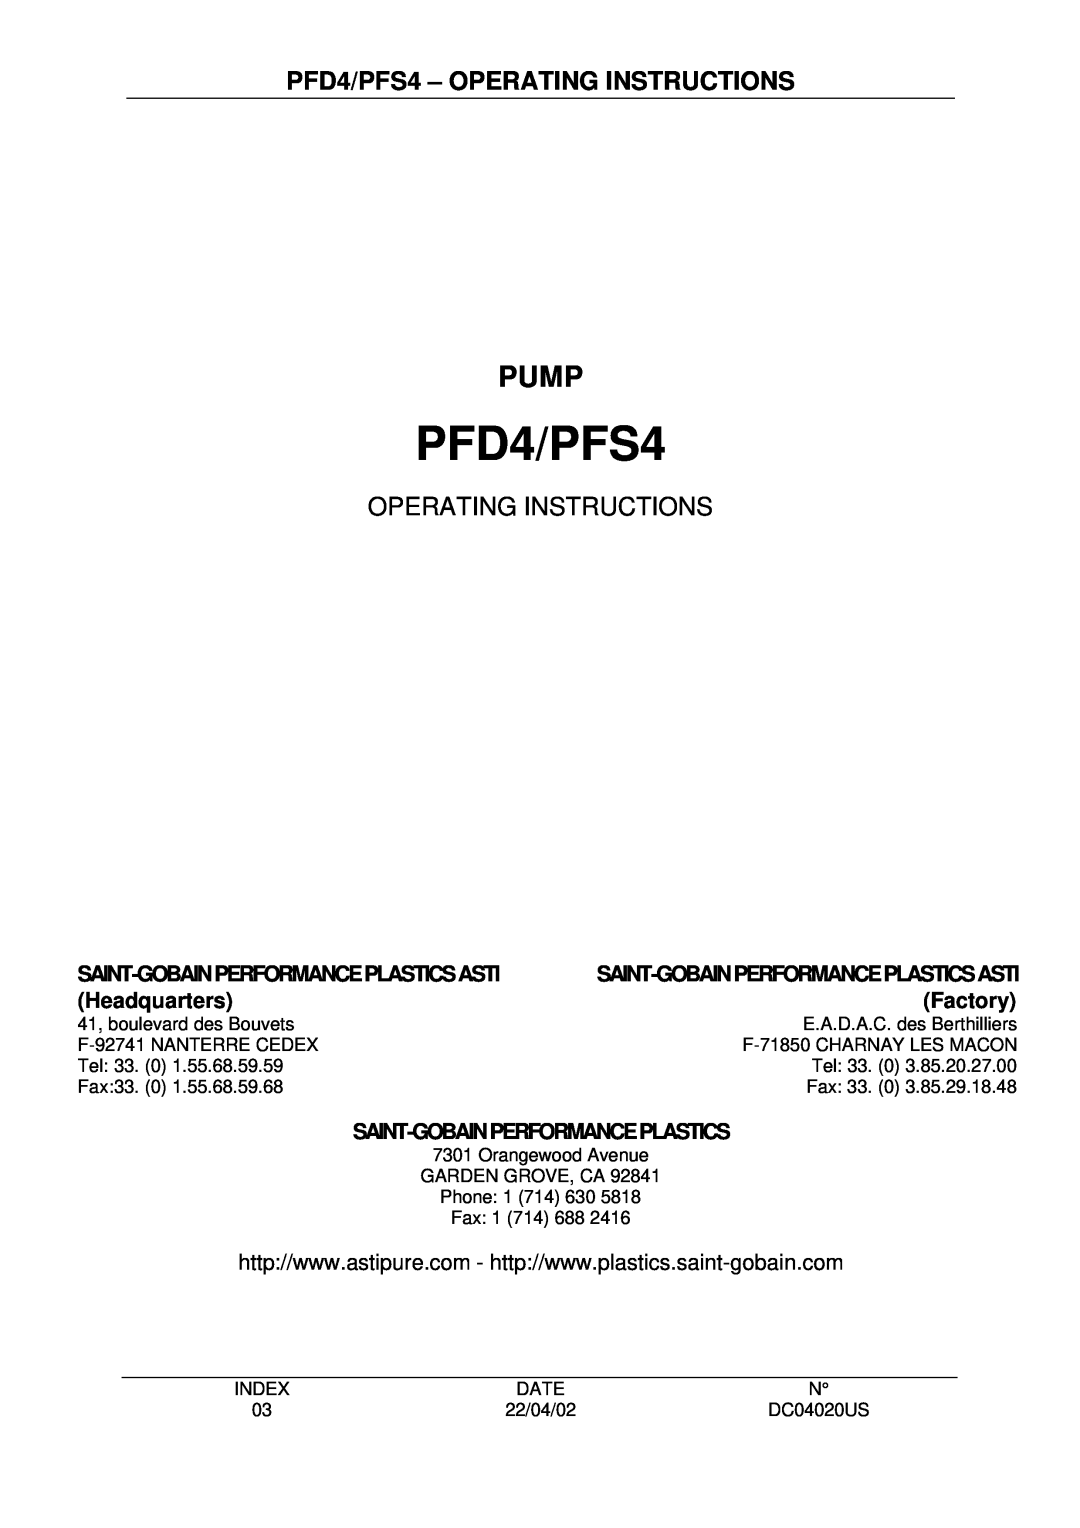 Saint Gobain Vidros manual PFD4/PFS4 - OPERATING INSTRUCTIONS, Saint-Gobainperformanceplasticsasti, Headquarters, Pump 